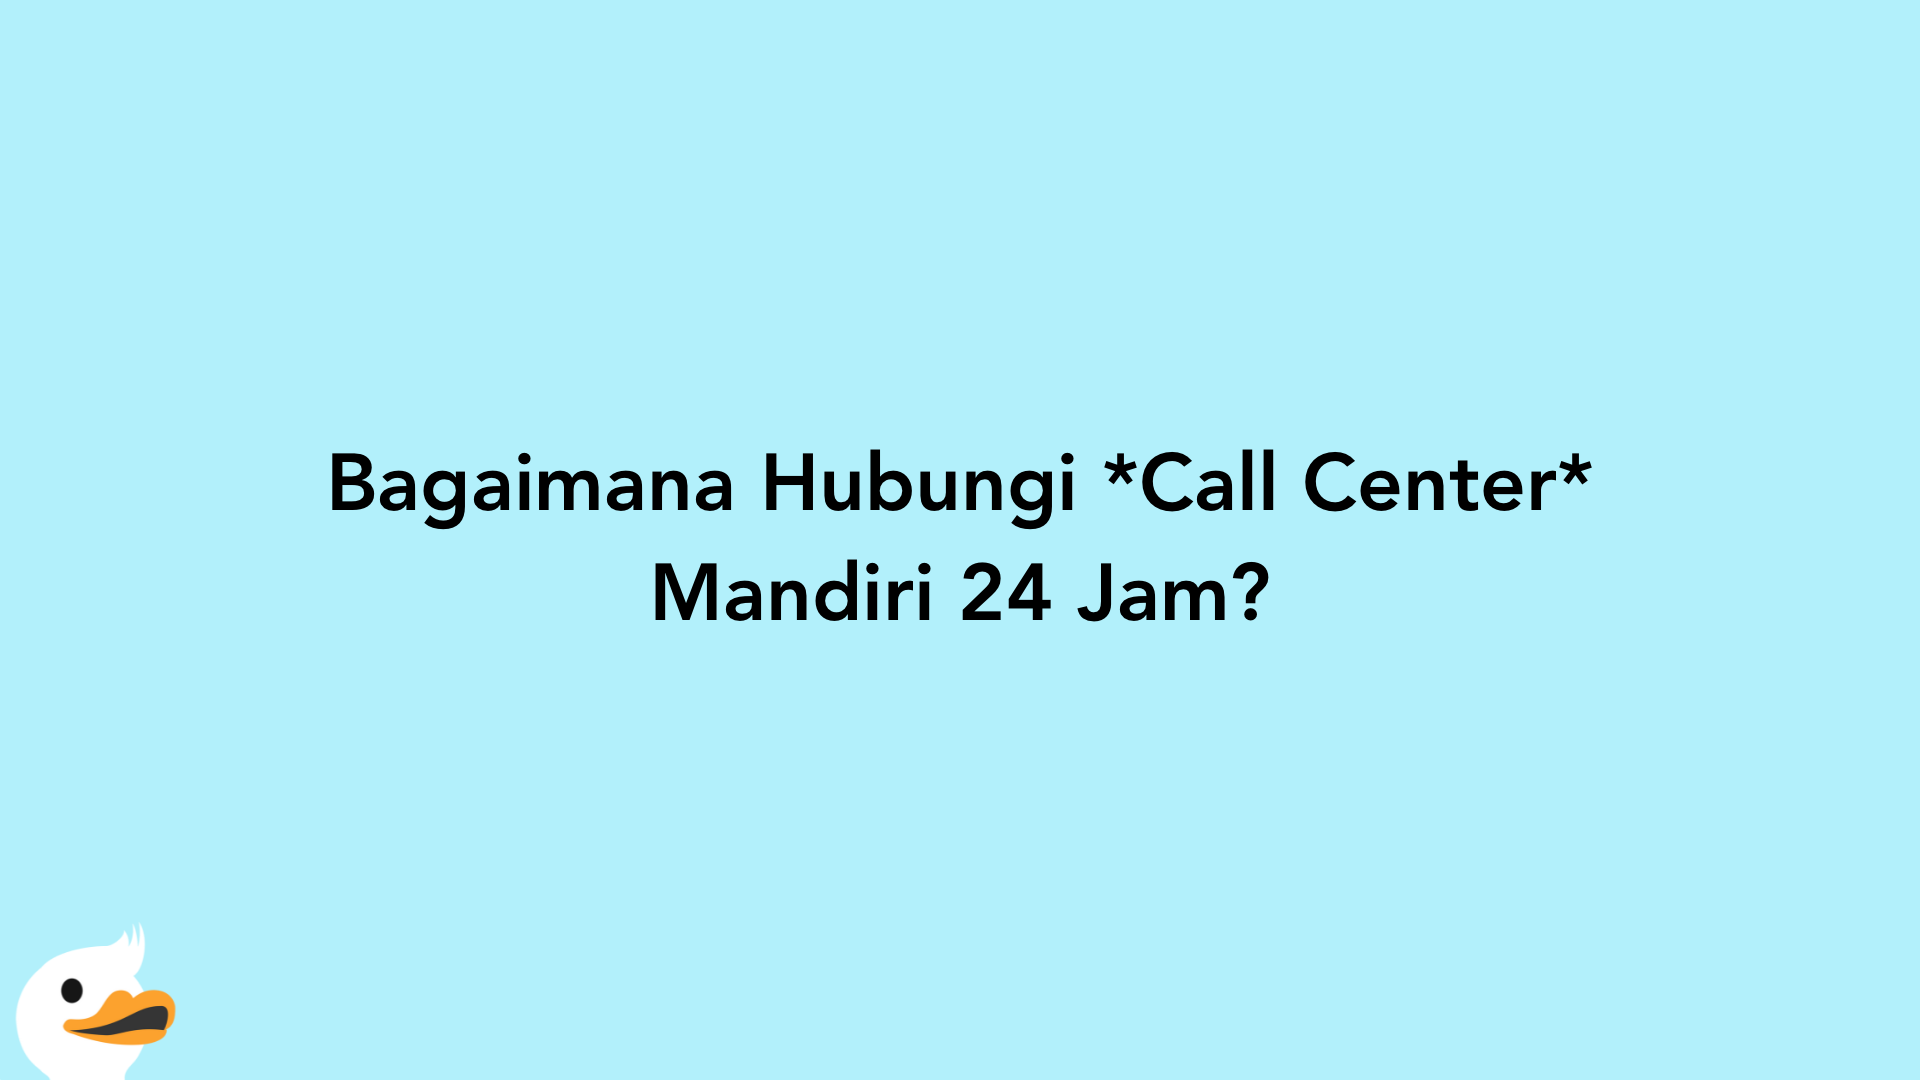 Bagaimana Hubungi Call Center Mandiri 24 Jam?